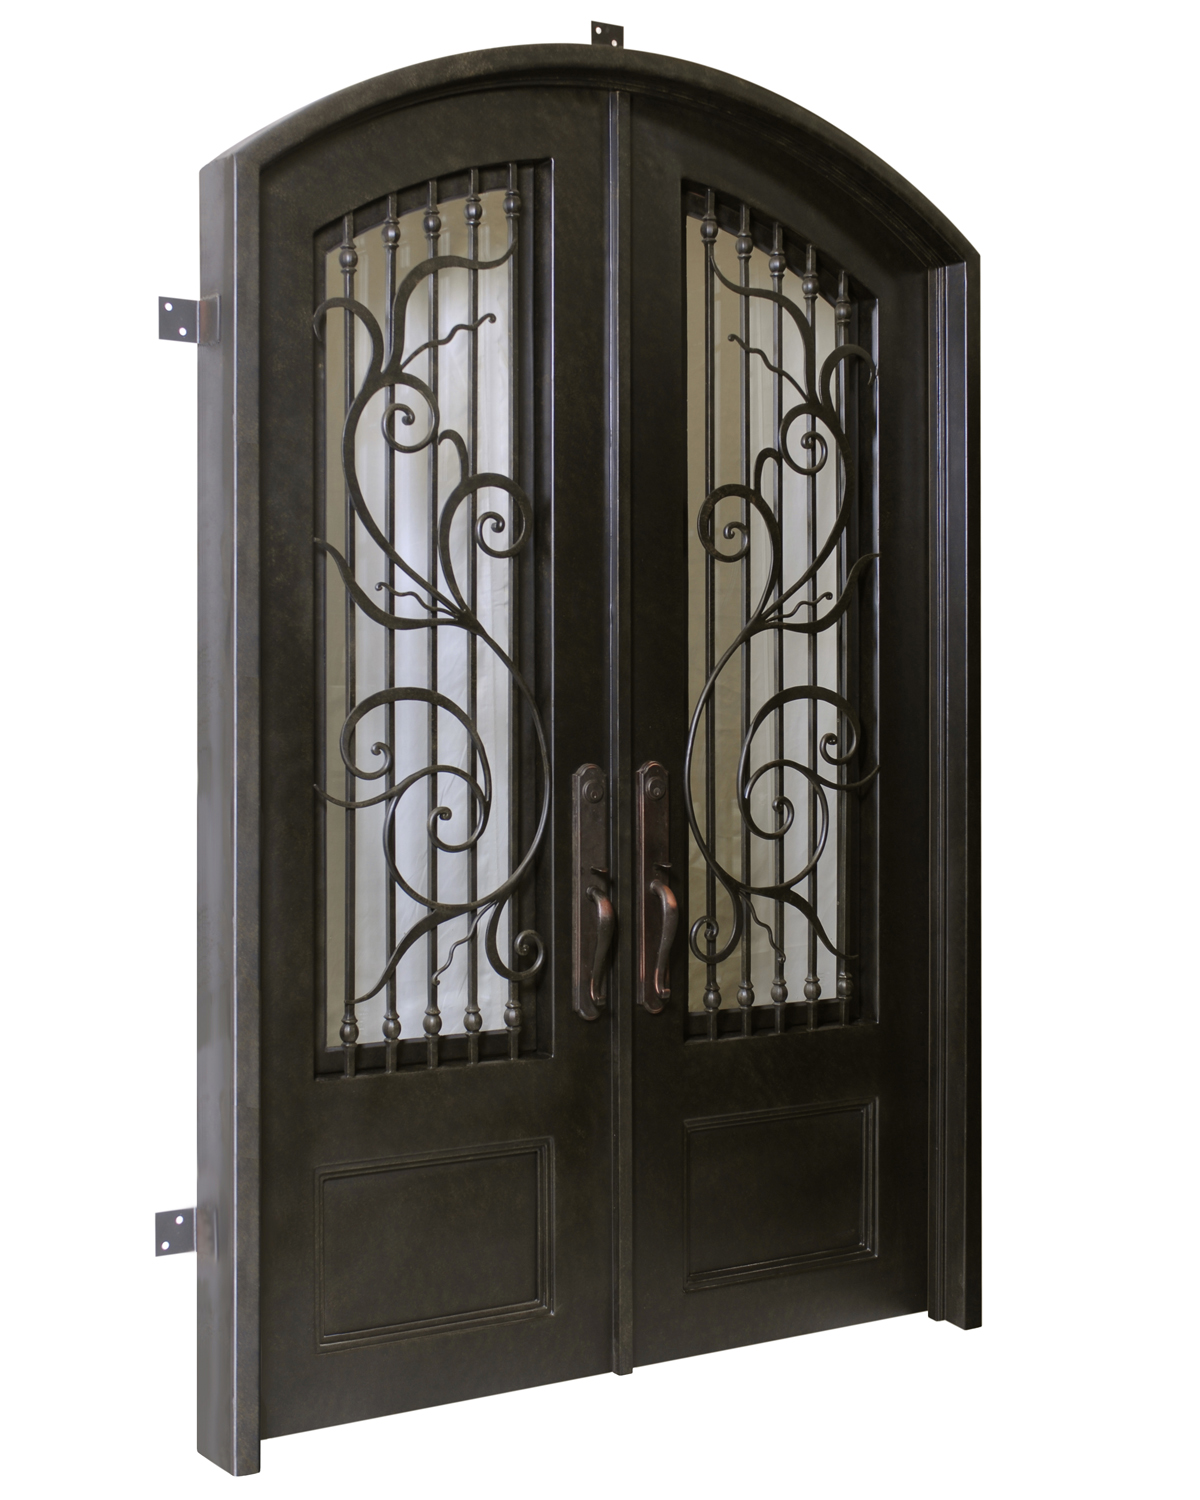 Florence handcrafted wrought iron door